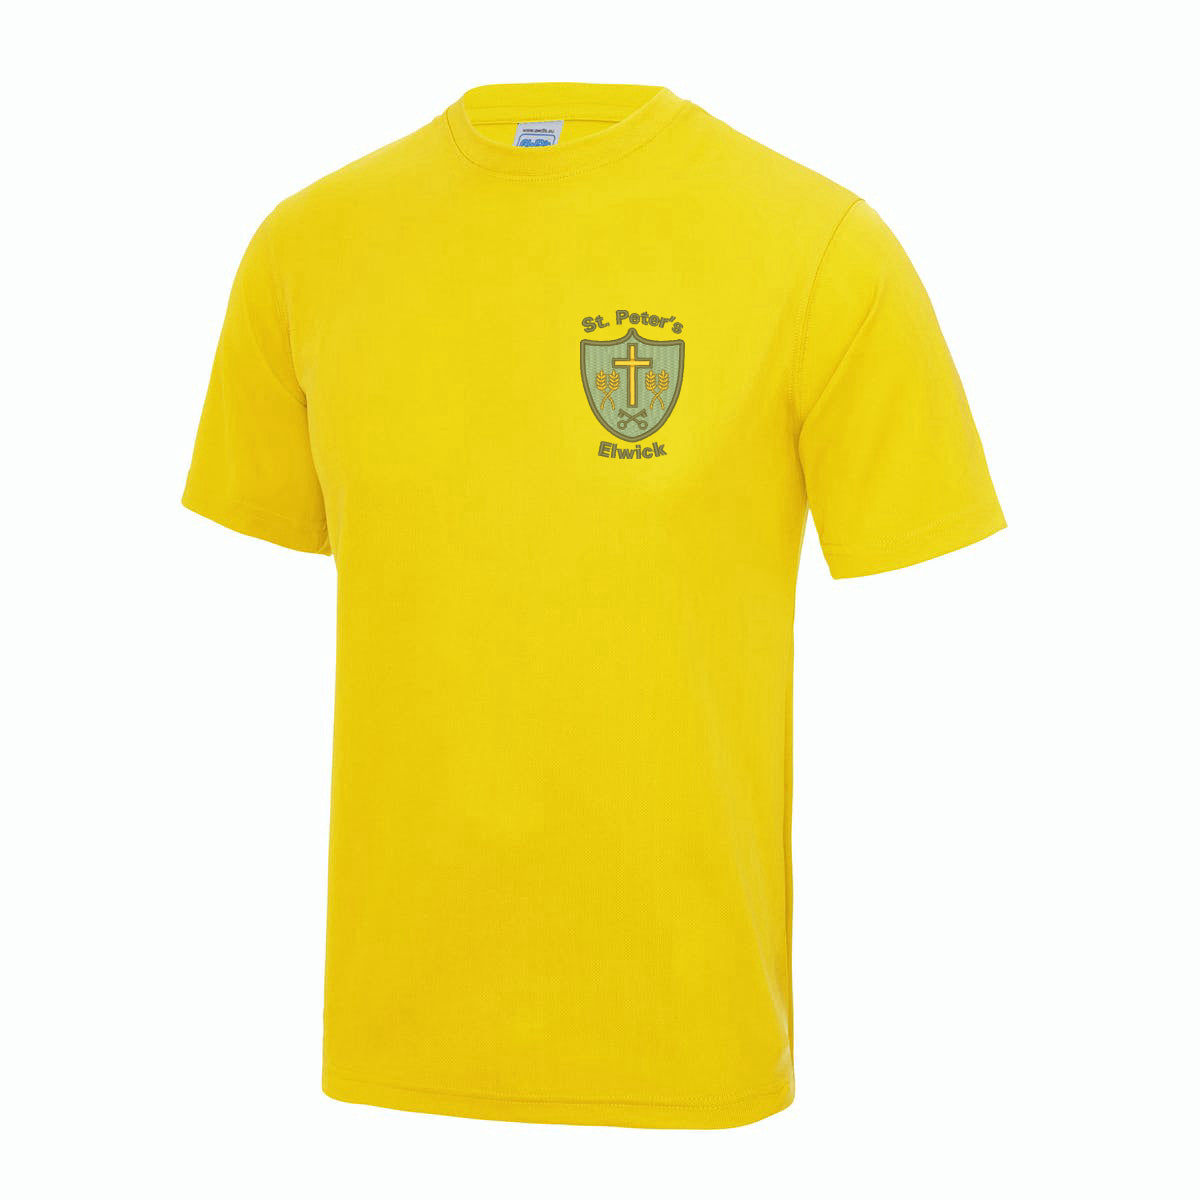 St. Peter's Elwick Yellow Sports T Shirt